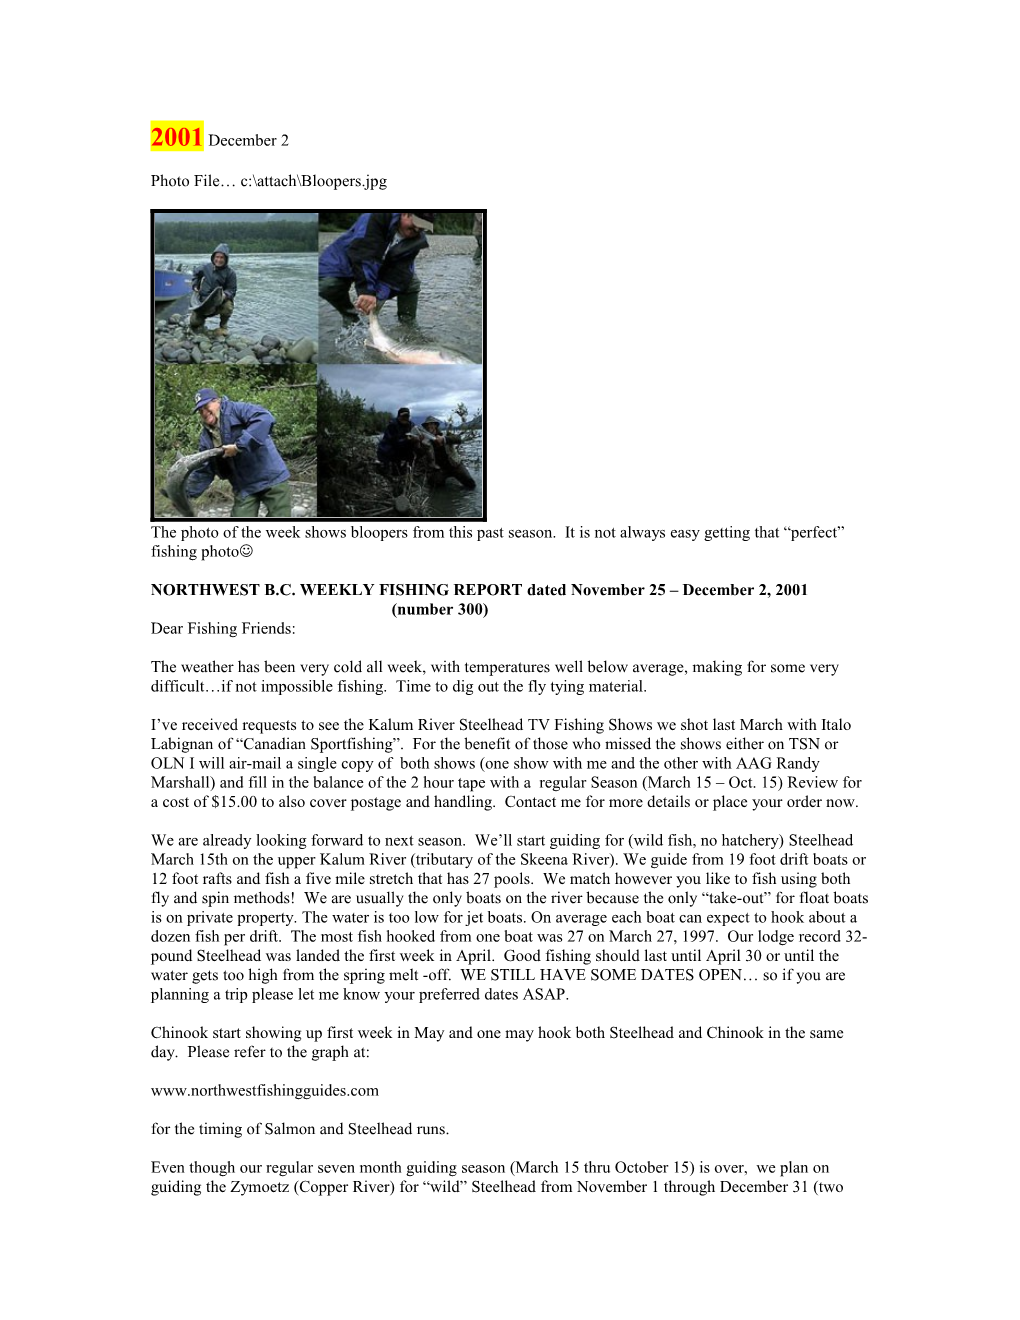 NORTHWEST B.C. WEEKLY FISHING REPORT Dated November 25 December 2, 2001